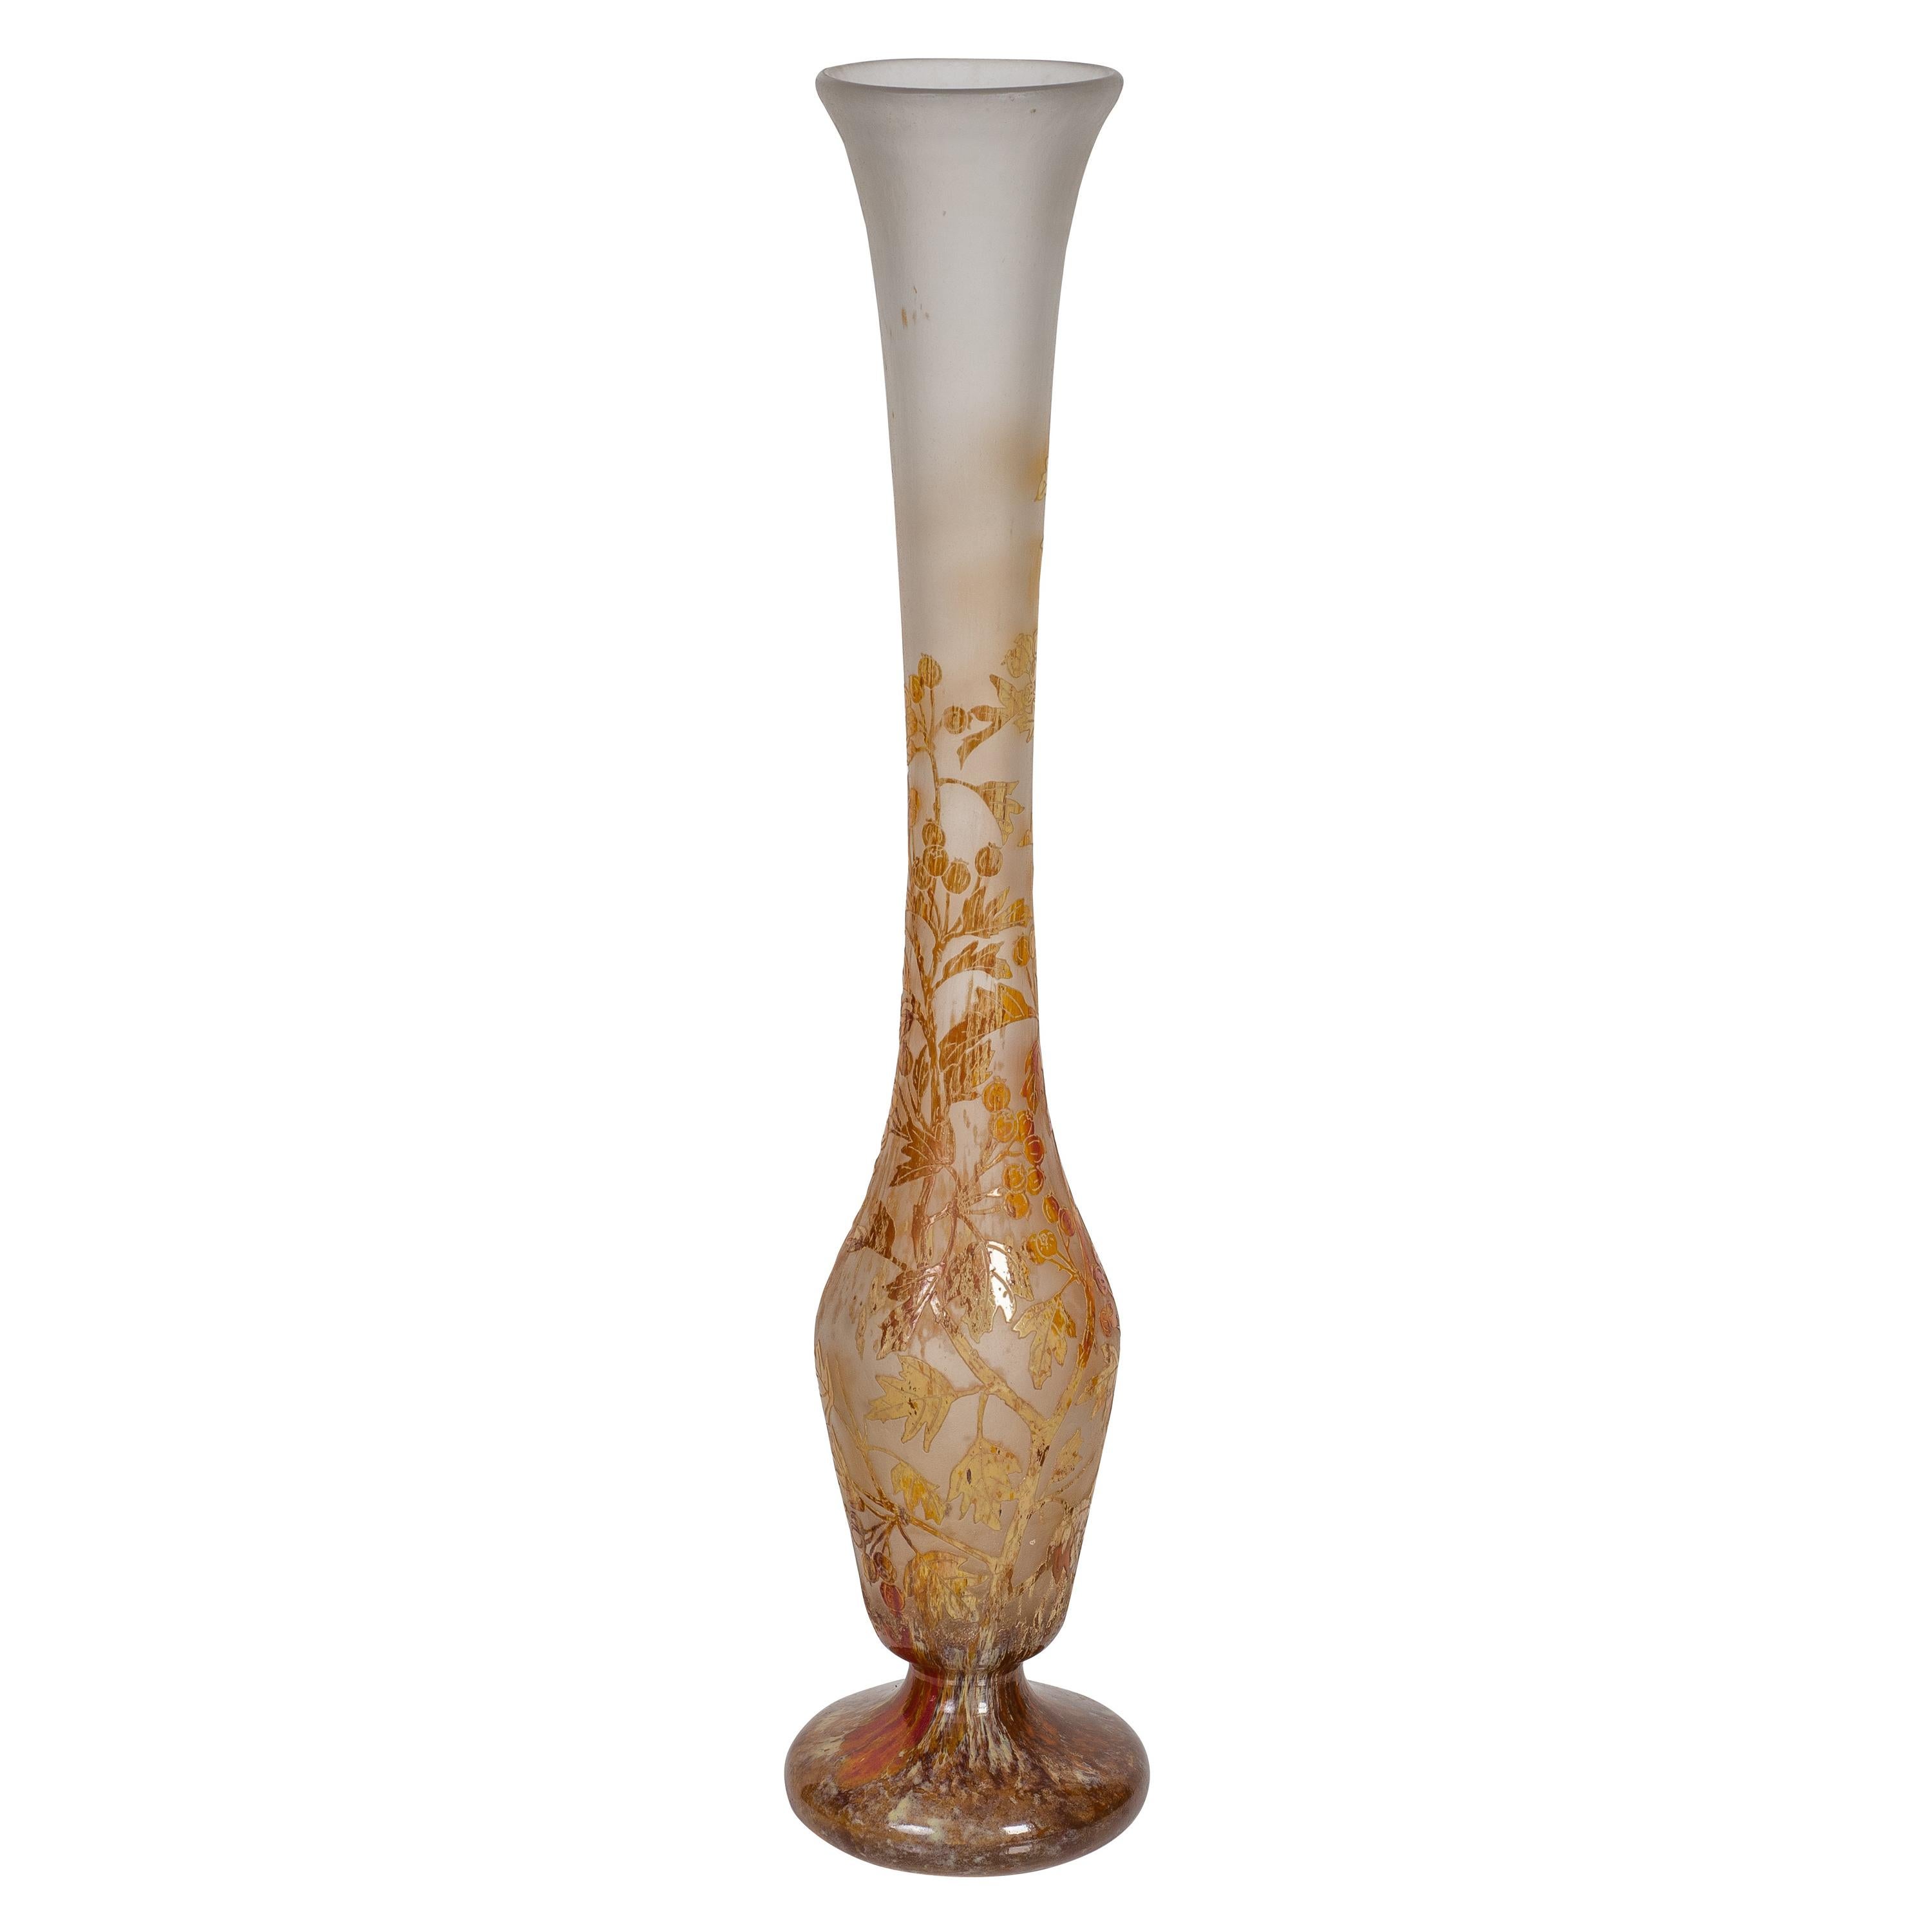 Daum Nancy Enamelled and Acid Etched Glass Vase, "Flowers and Berries"